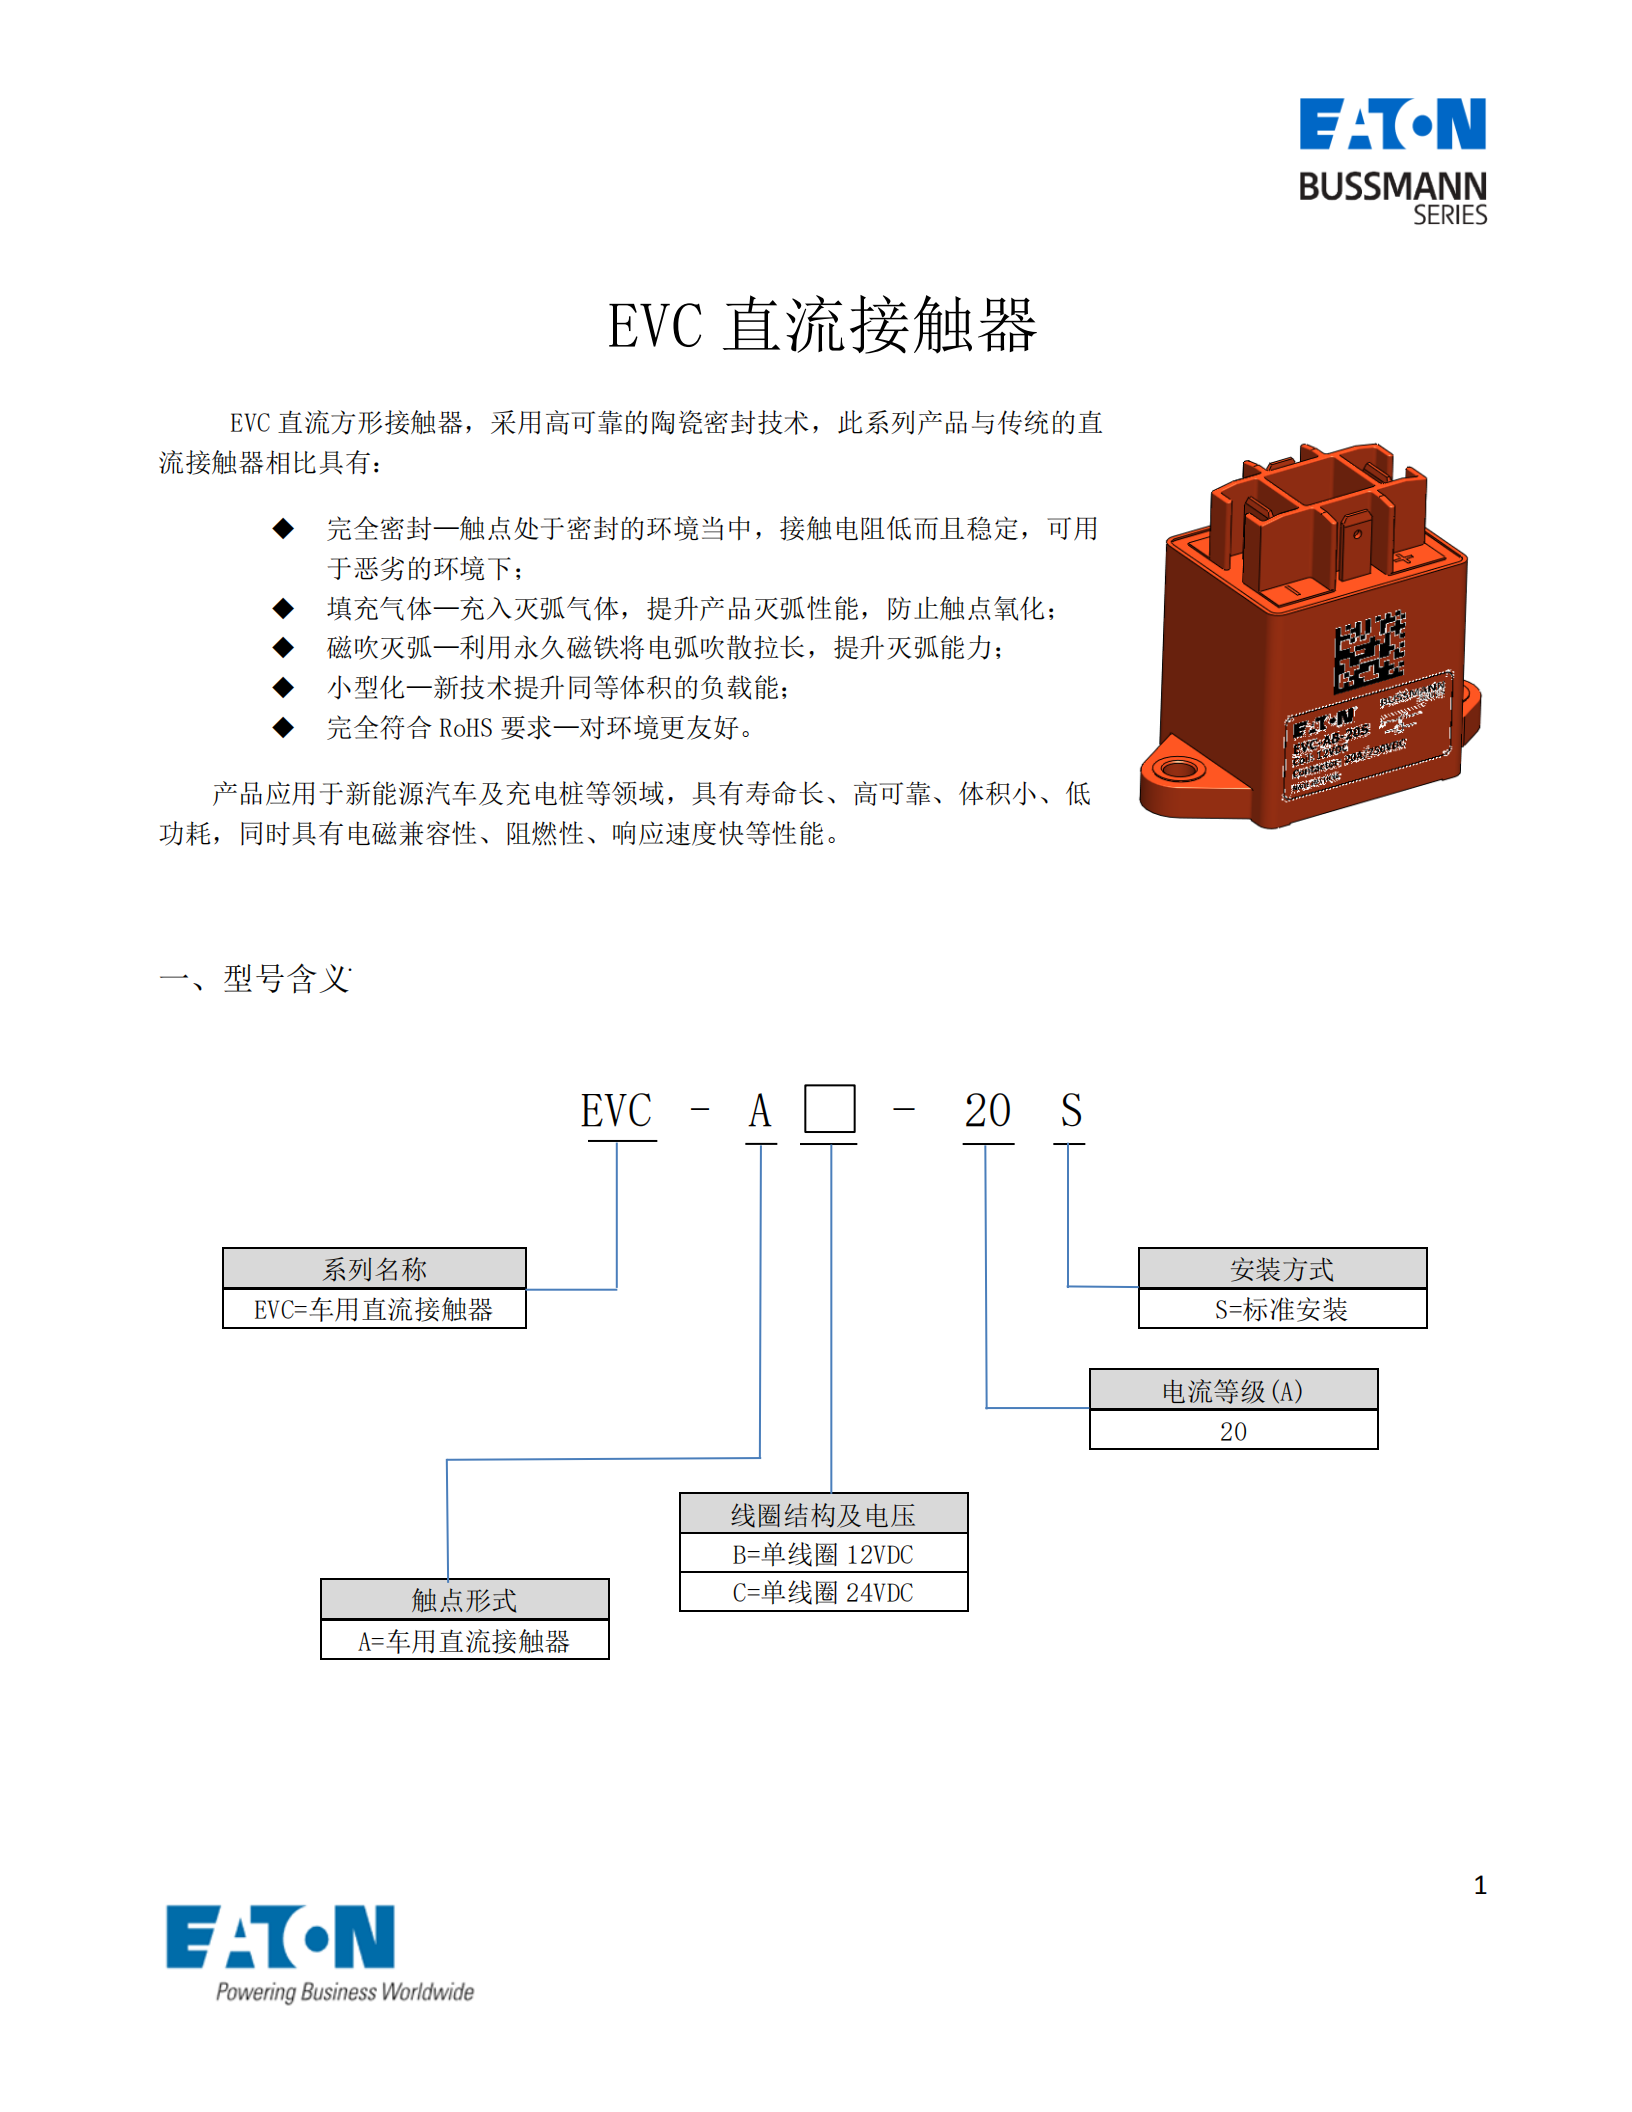 EVC-A-20S直流接触器